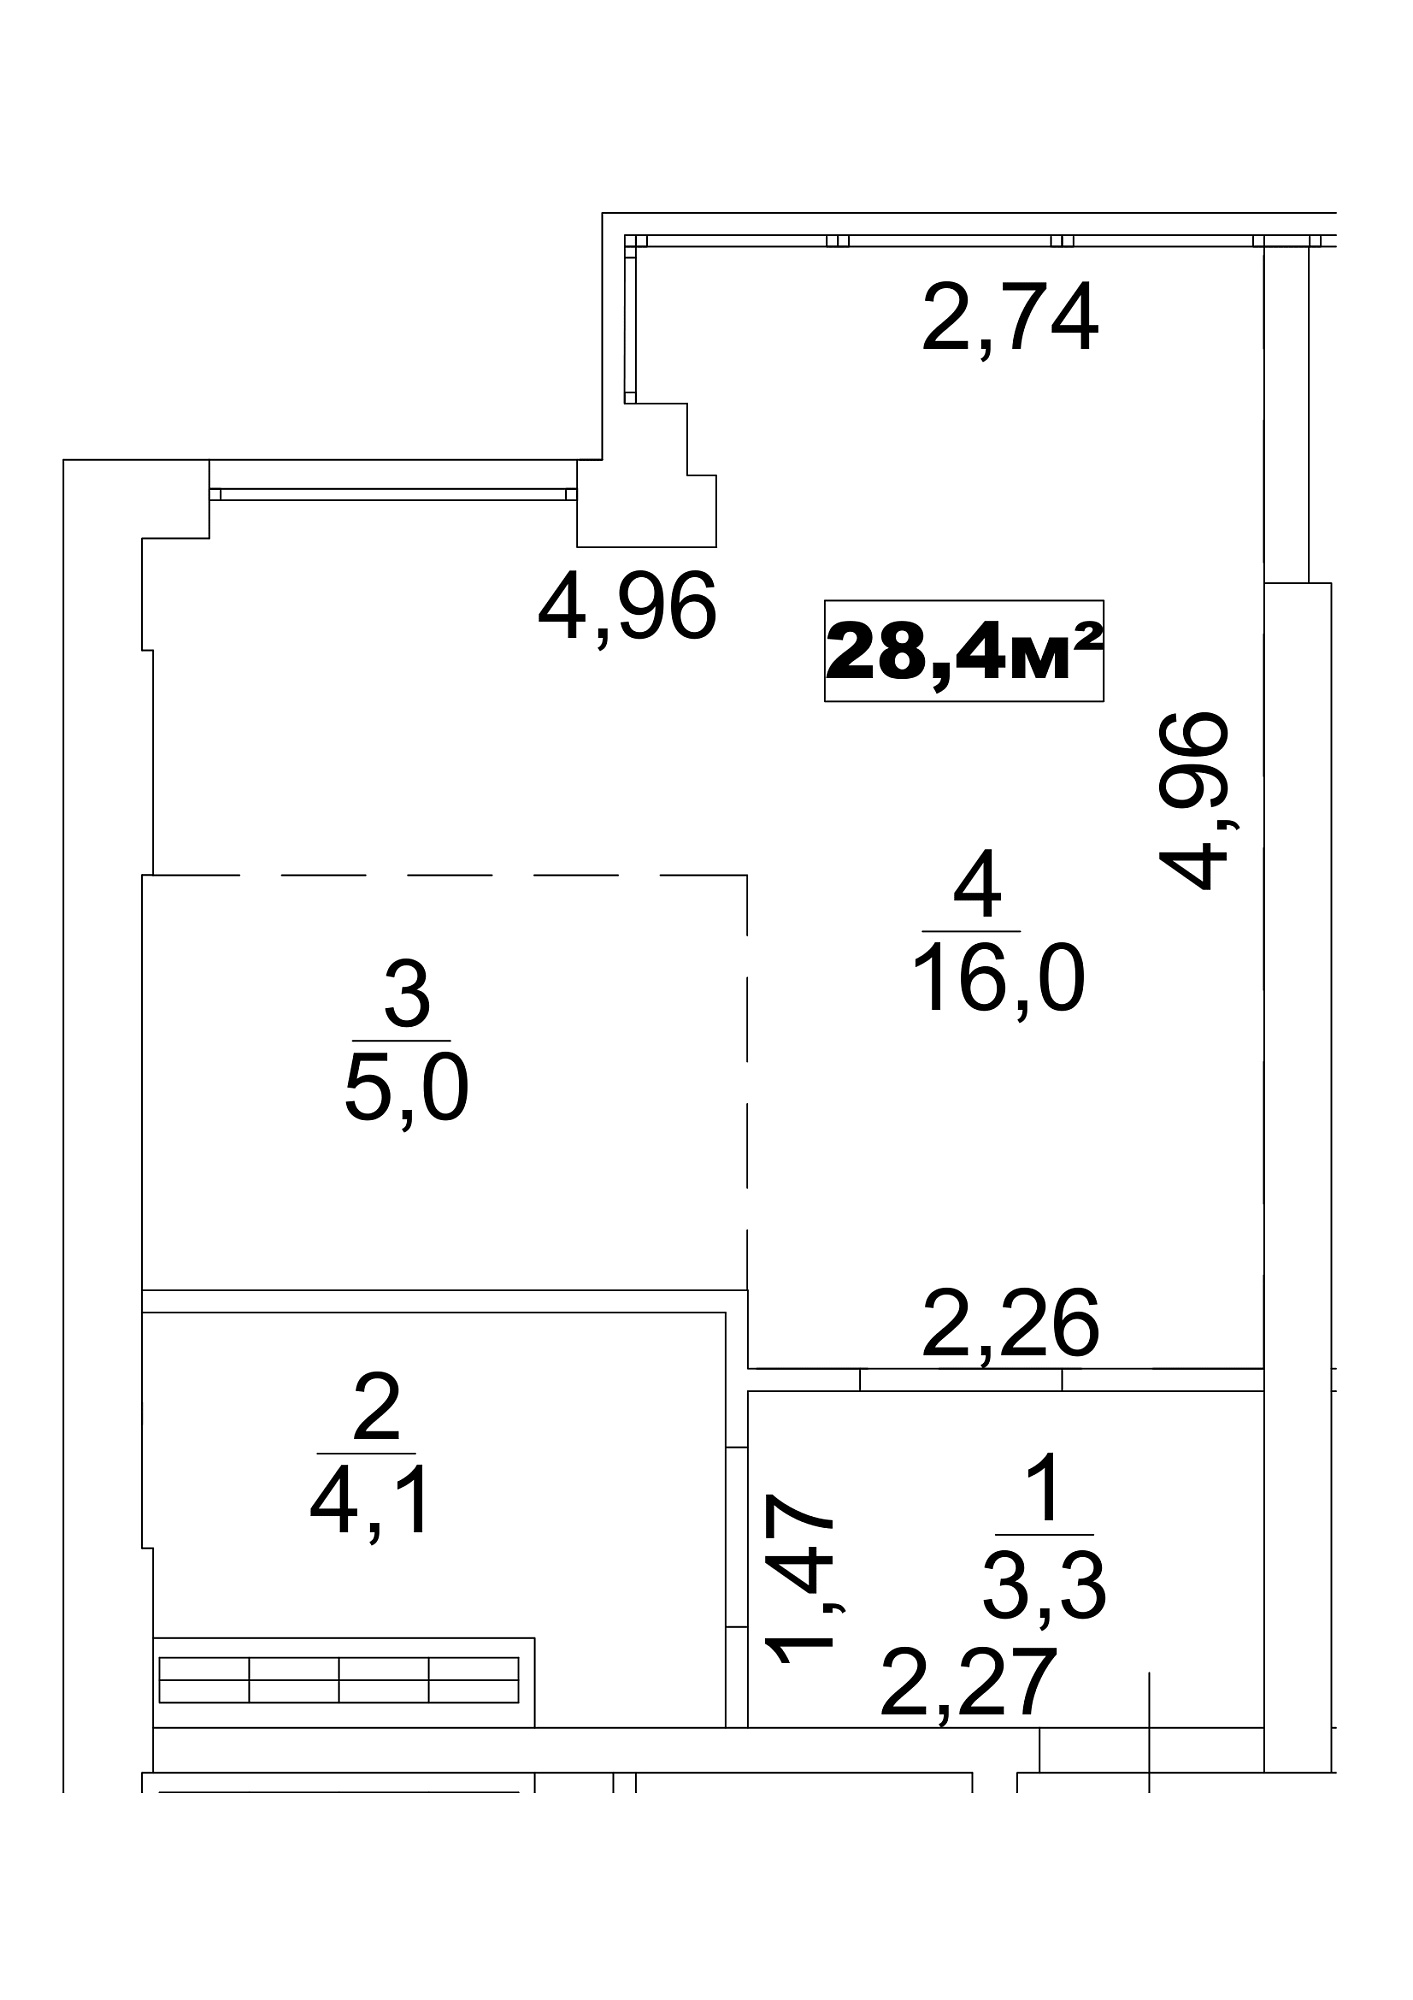 Planning Smart flats area 28.4m2, AB-13-04/0027б.